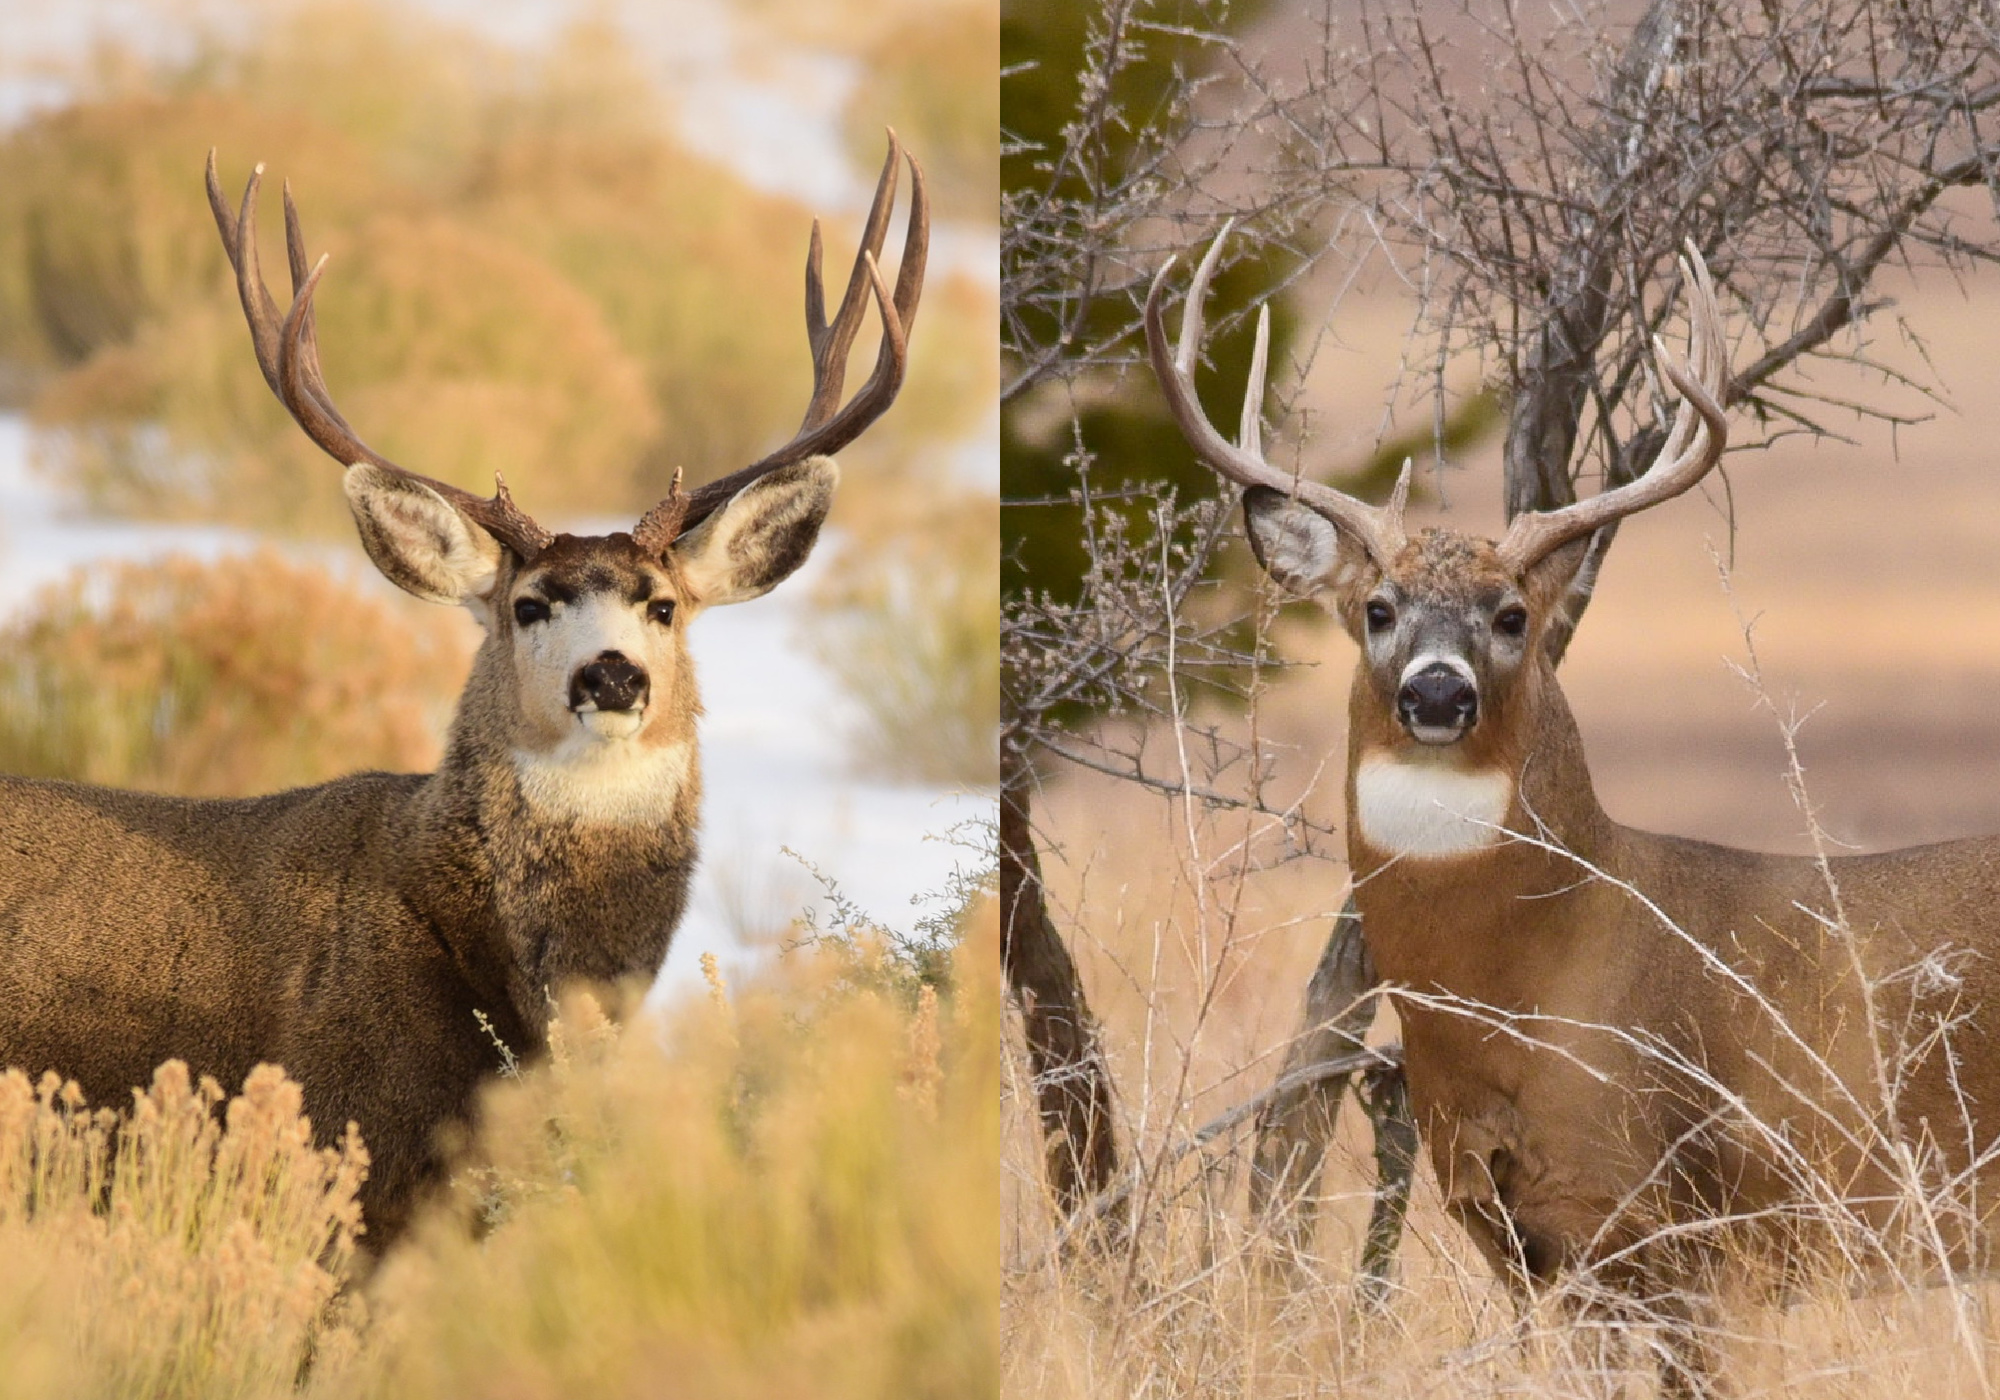 Mule deer antlers vs. whitetail antlers, in a head-on comparison.